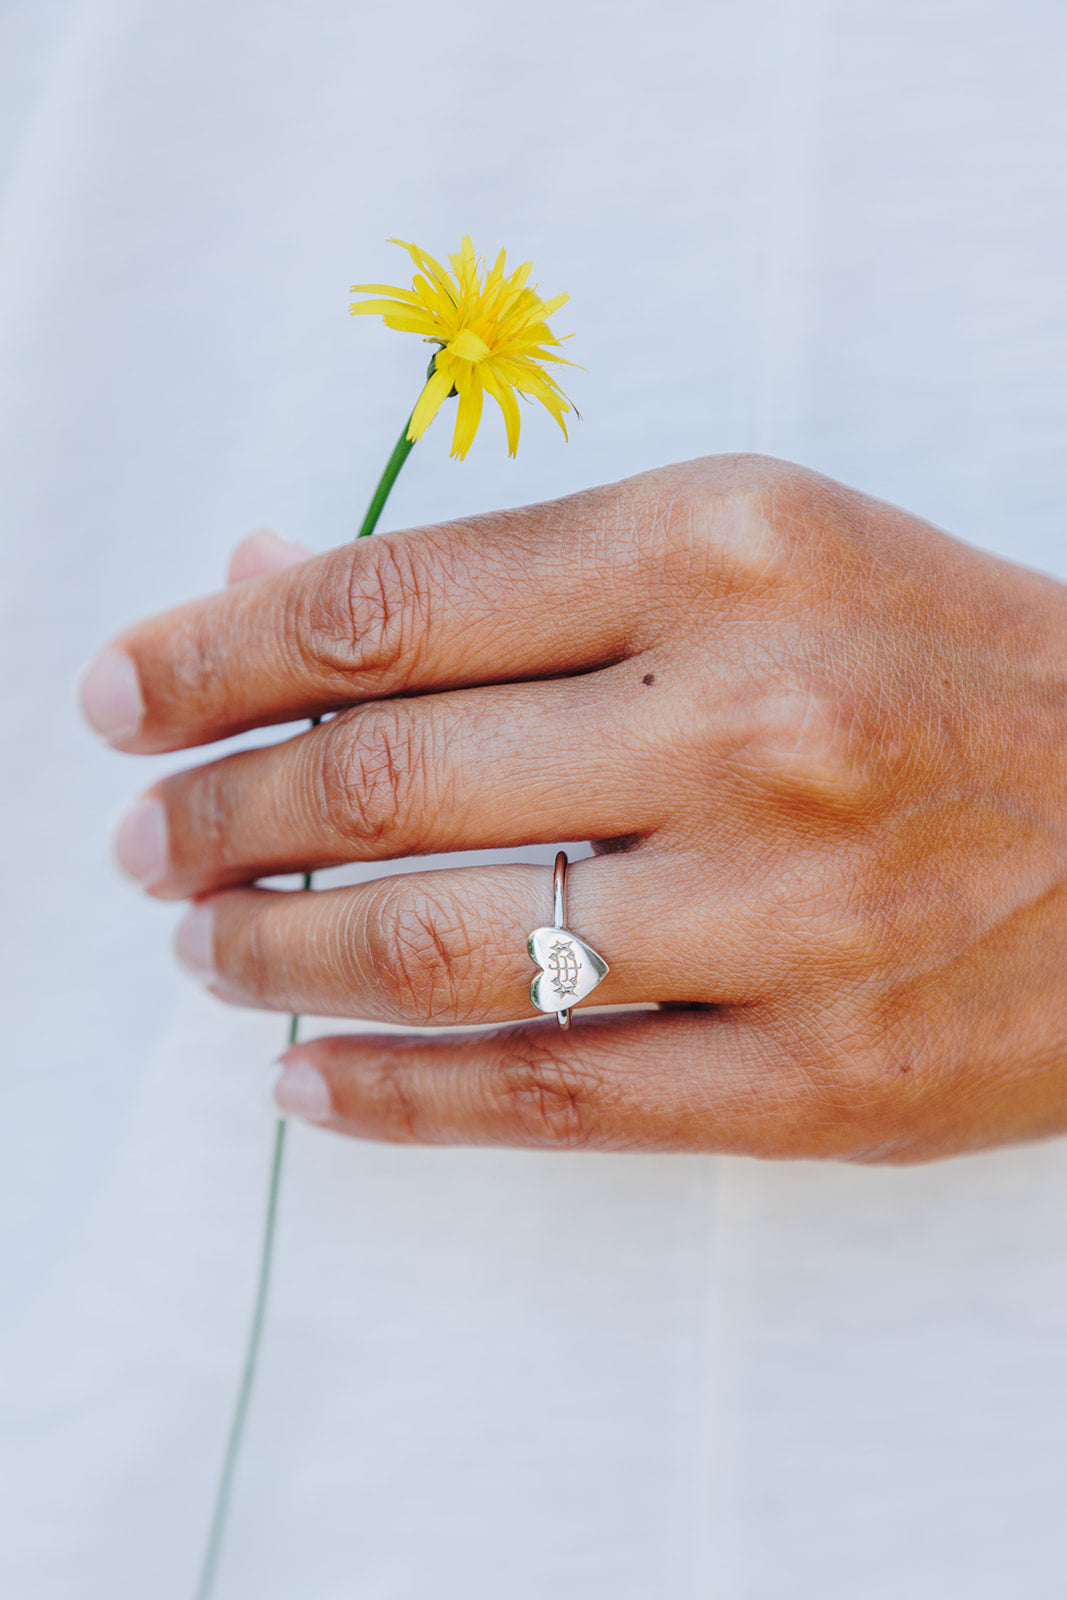 simple silver heart bahai ringstone ring holding yellow dandelion flower